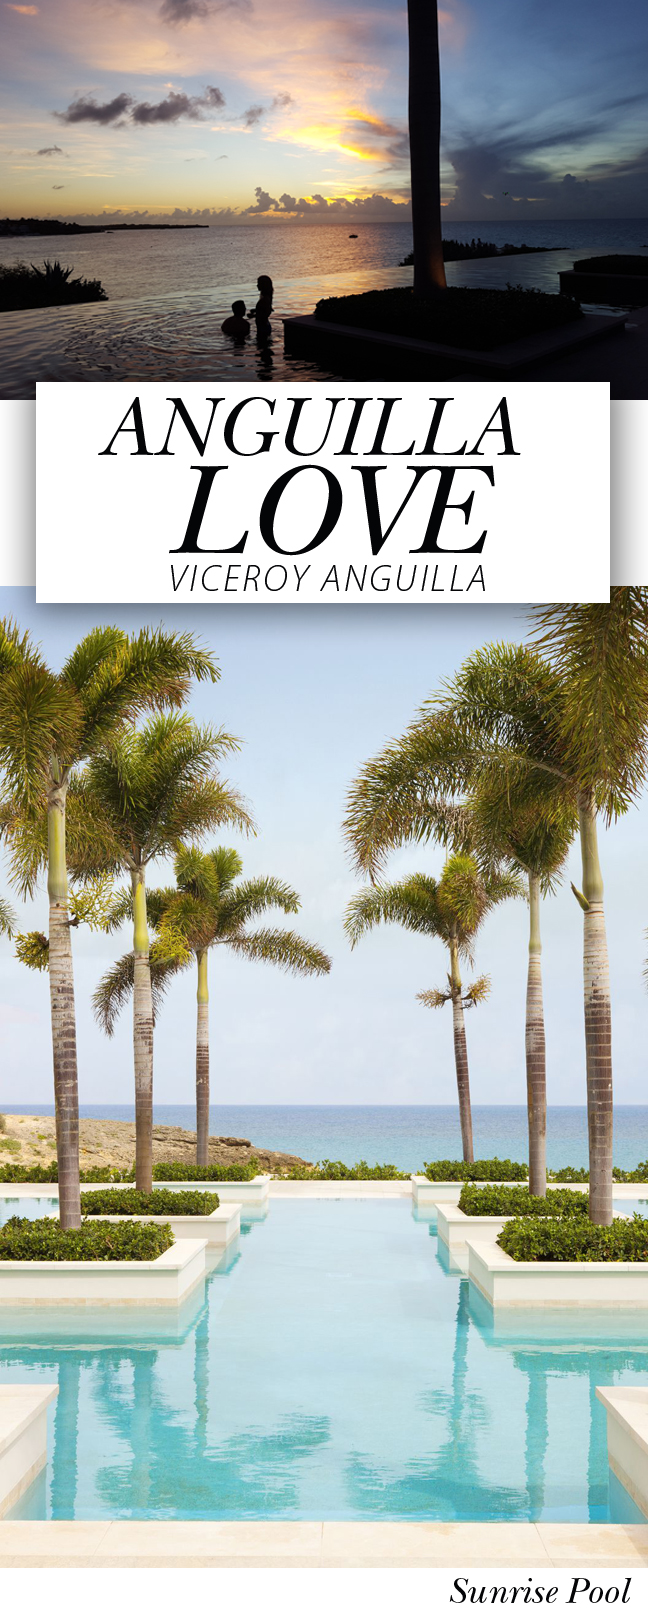 Anguilla Luxury Hotel, Viceroy Resorts, Viceroy Anguilla, Island, Luxury Honeymoons